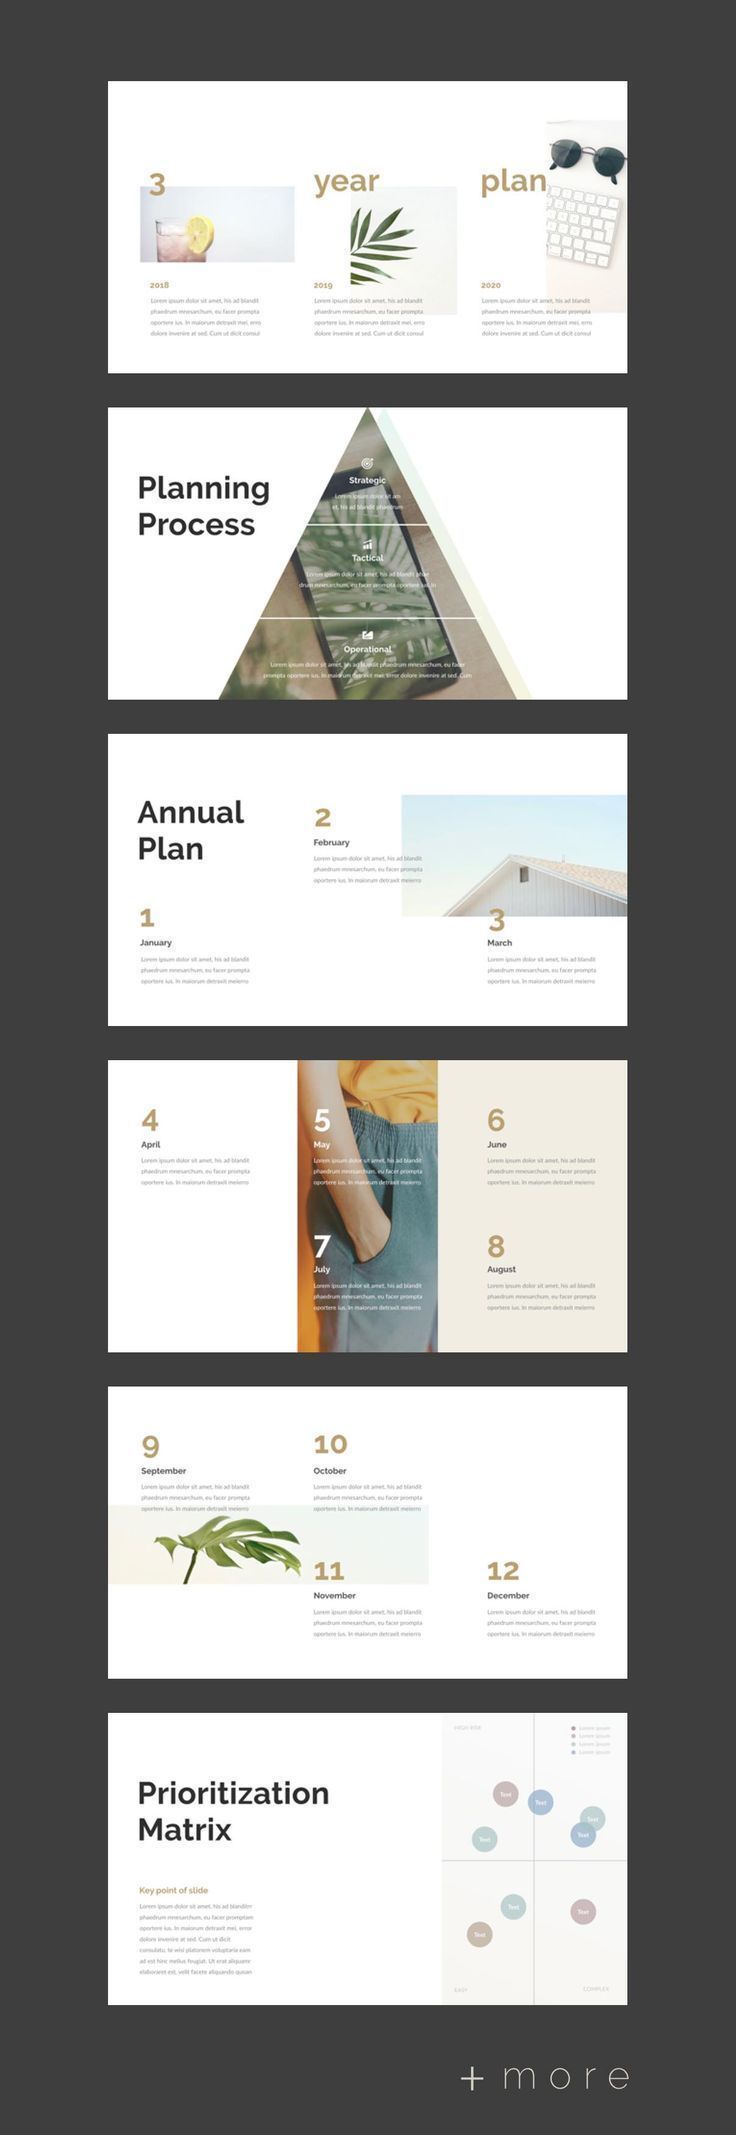 Planner presentation template - 2018 business planning #ppt #plan